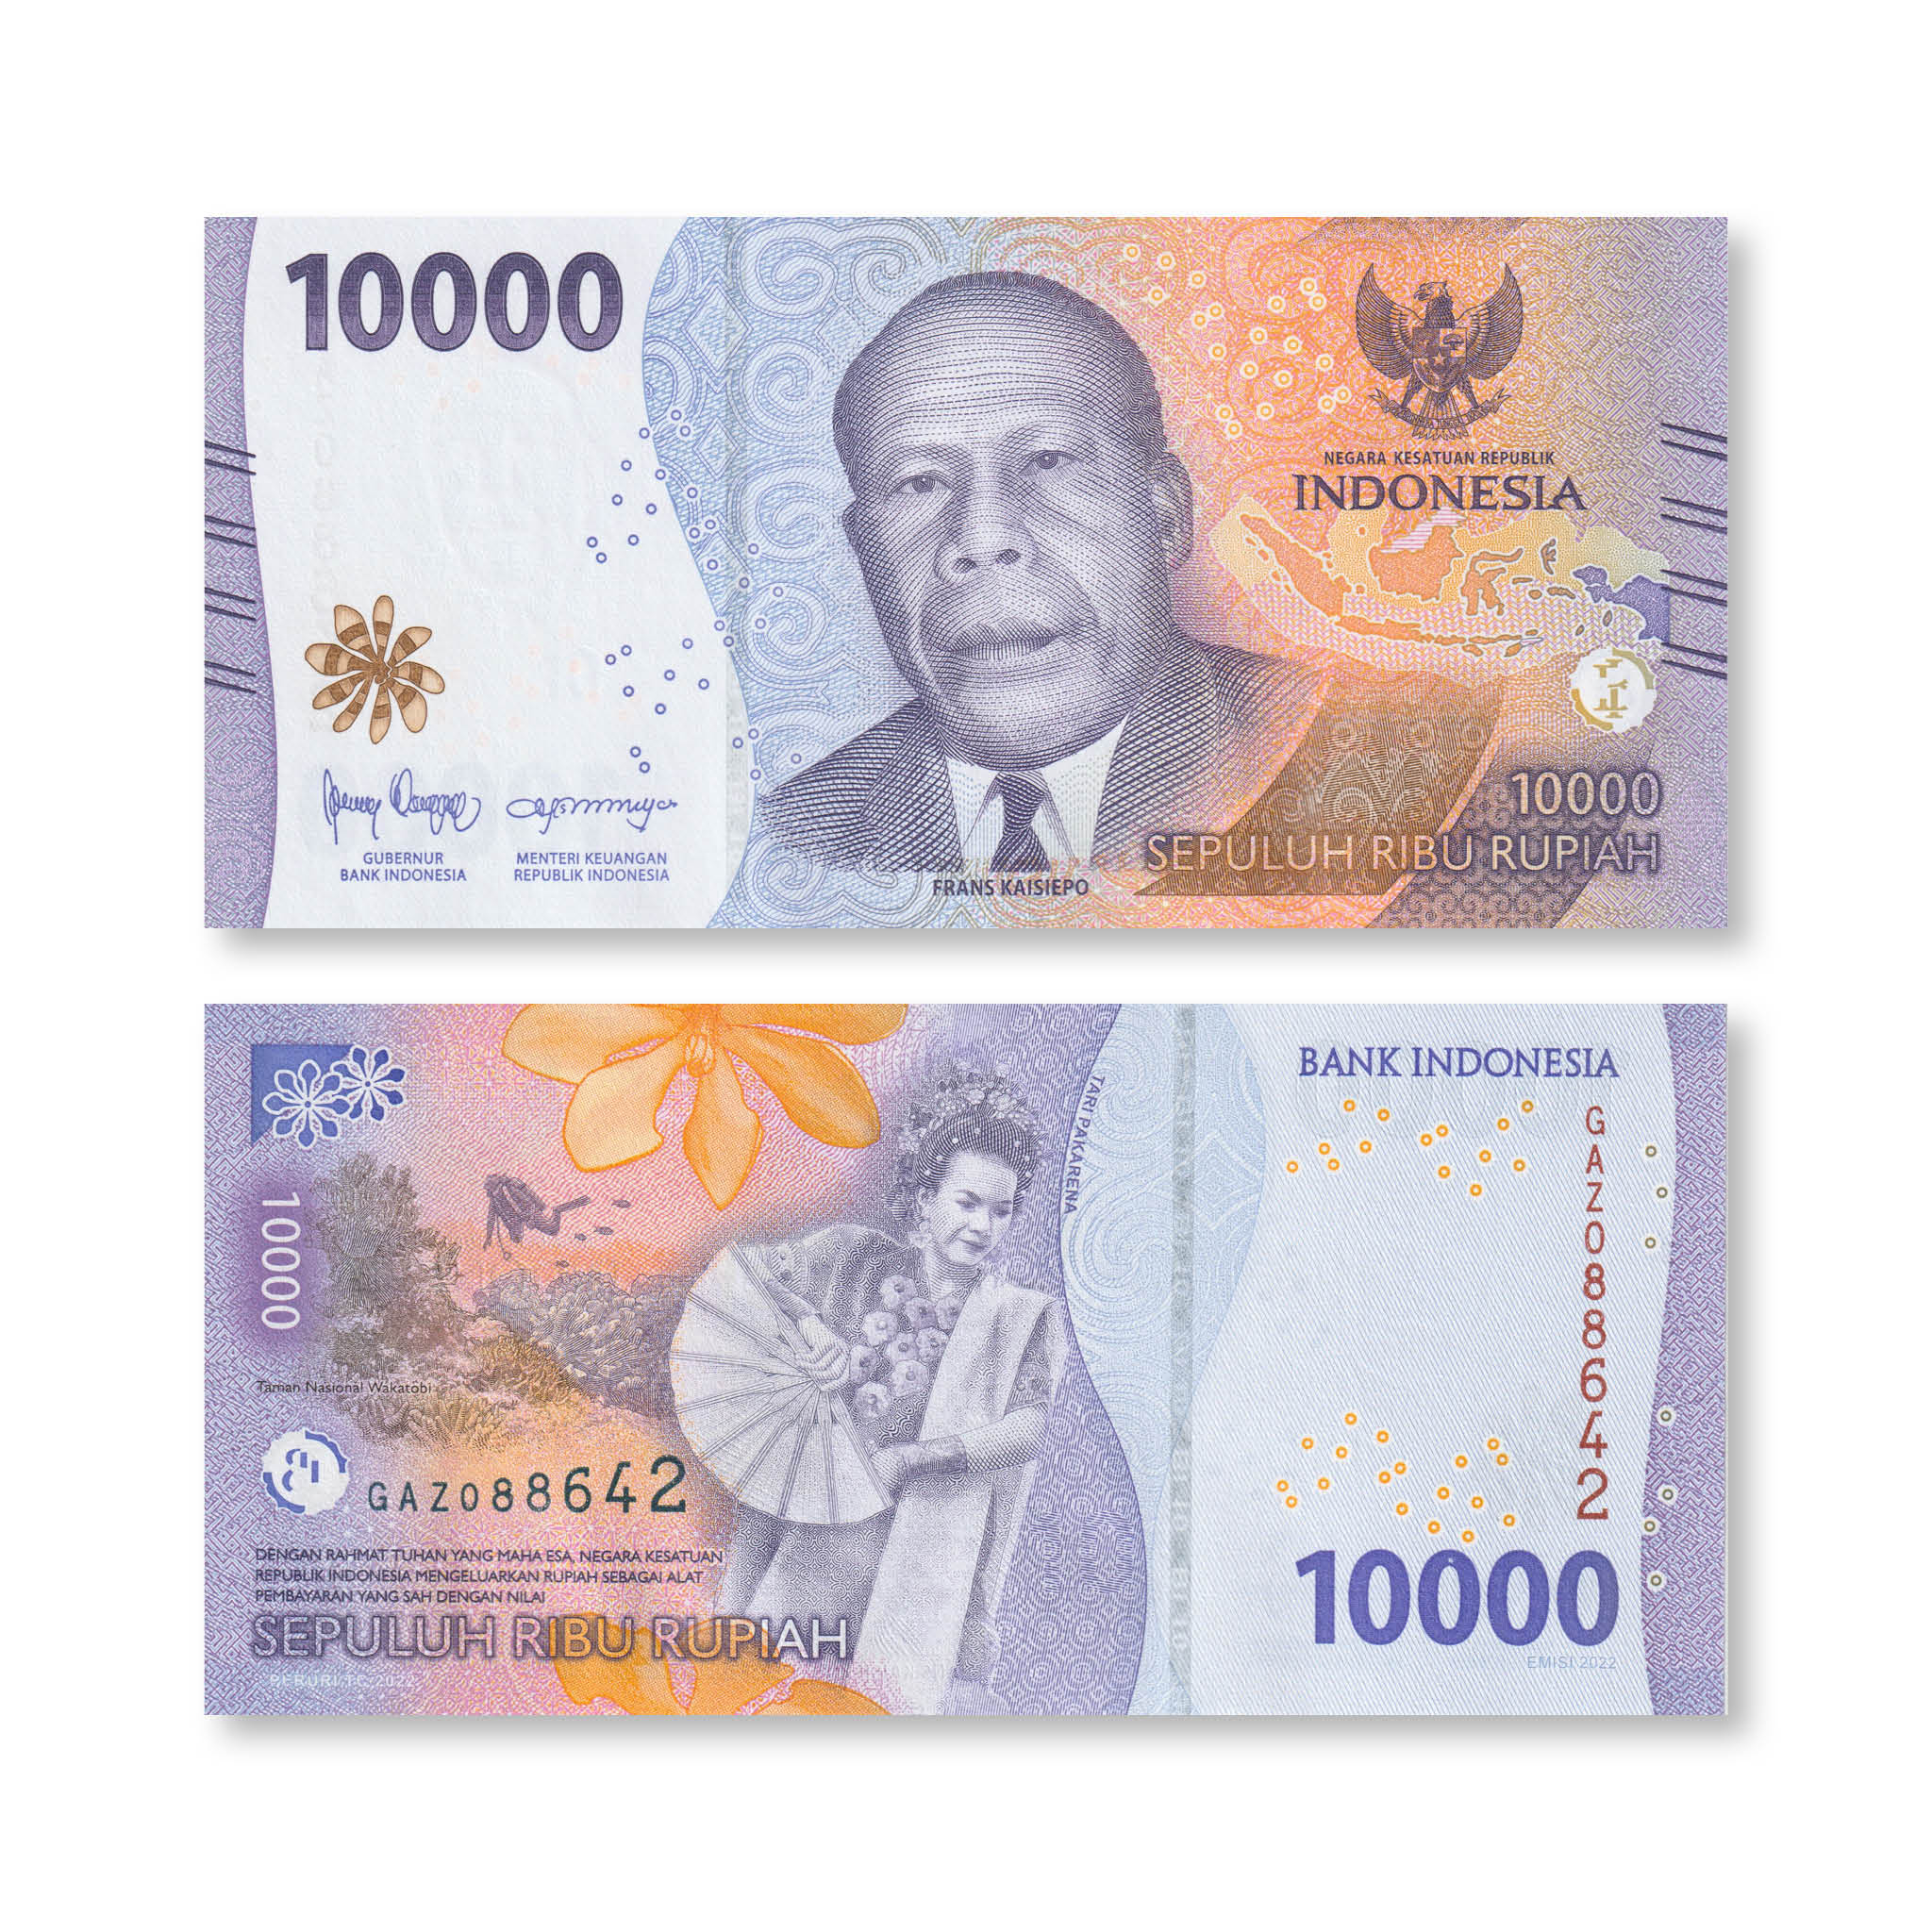 Indonesia 10000 Rupiah, 2022, B620a, UNC - Robert's World Money - World Banknotes